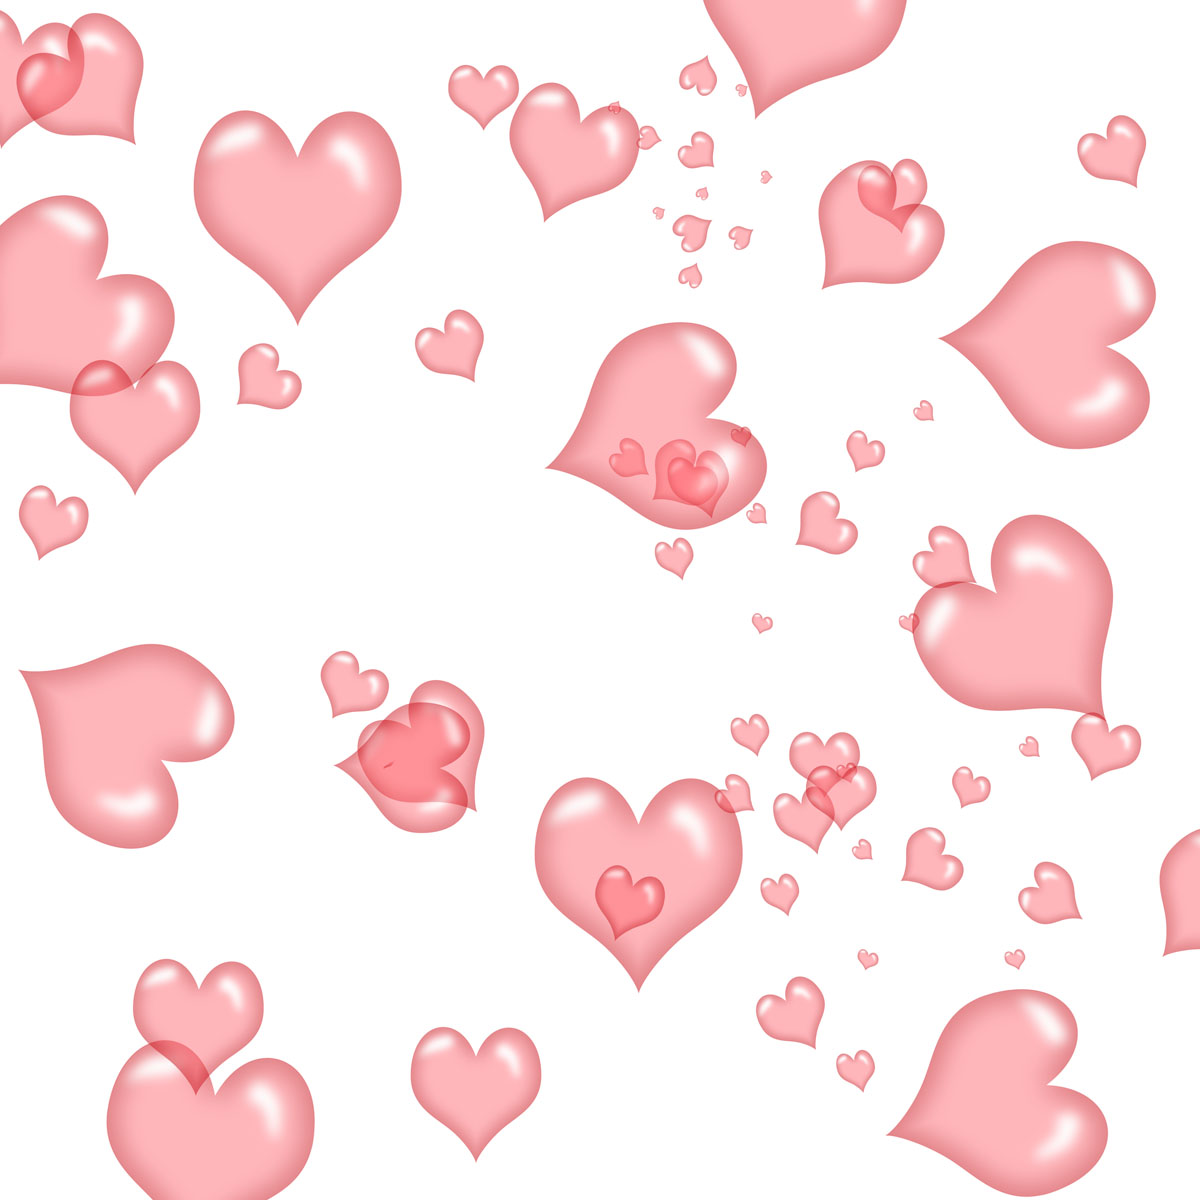 Granny Enchanted's Paper Directory: Free Pink Hearts Digital Scrapbook Paper